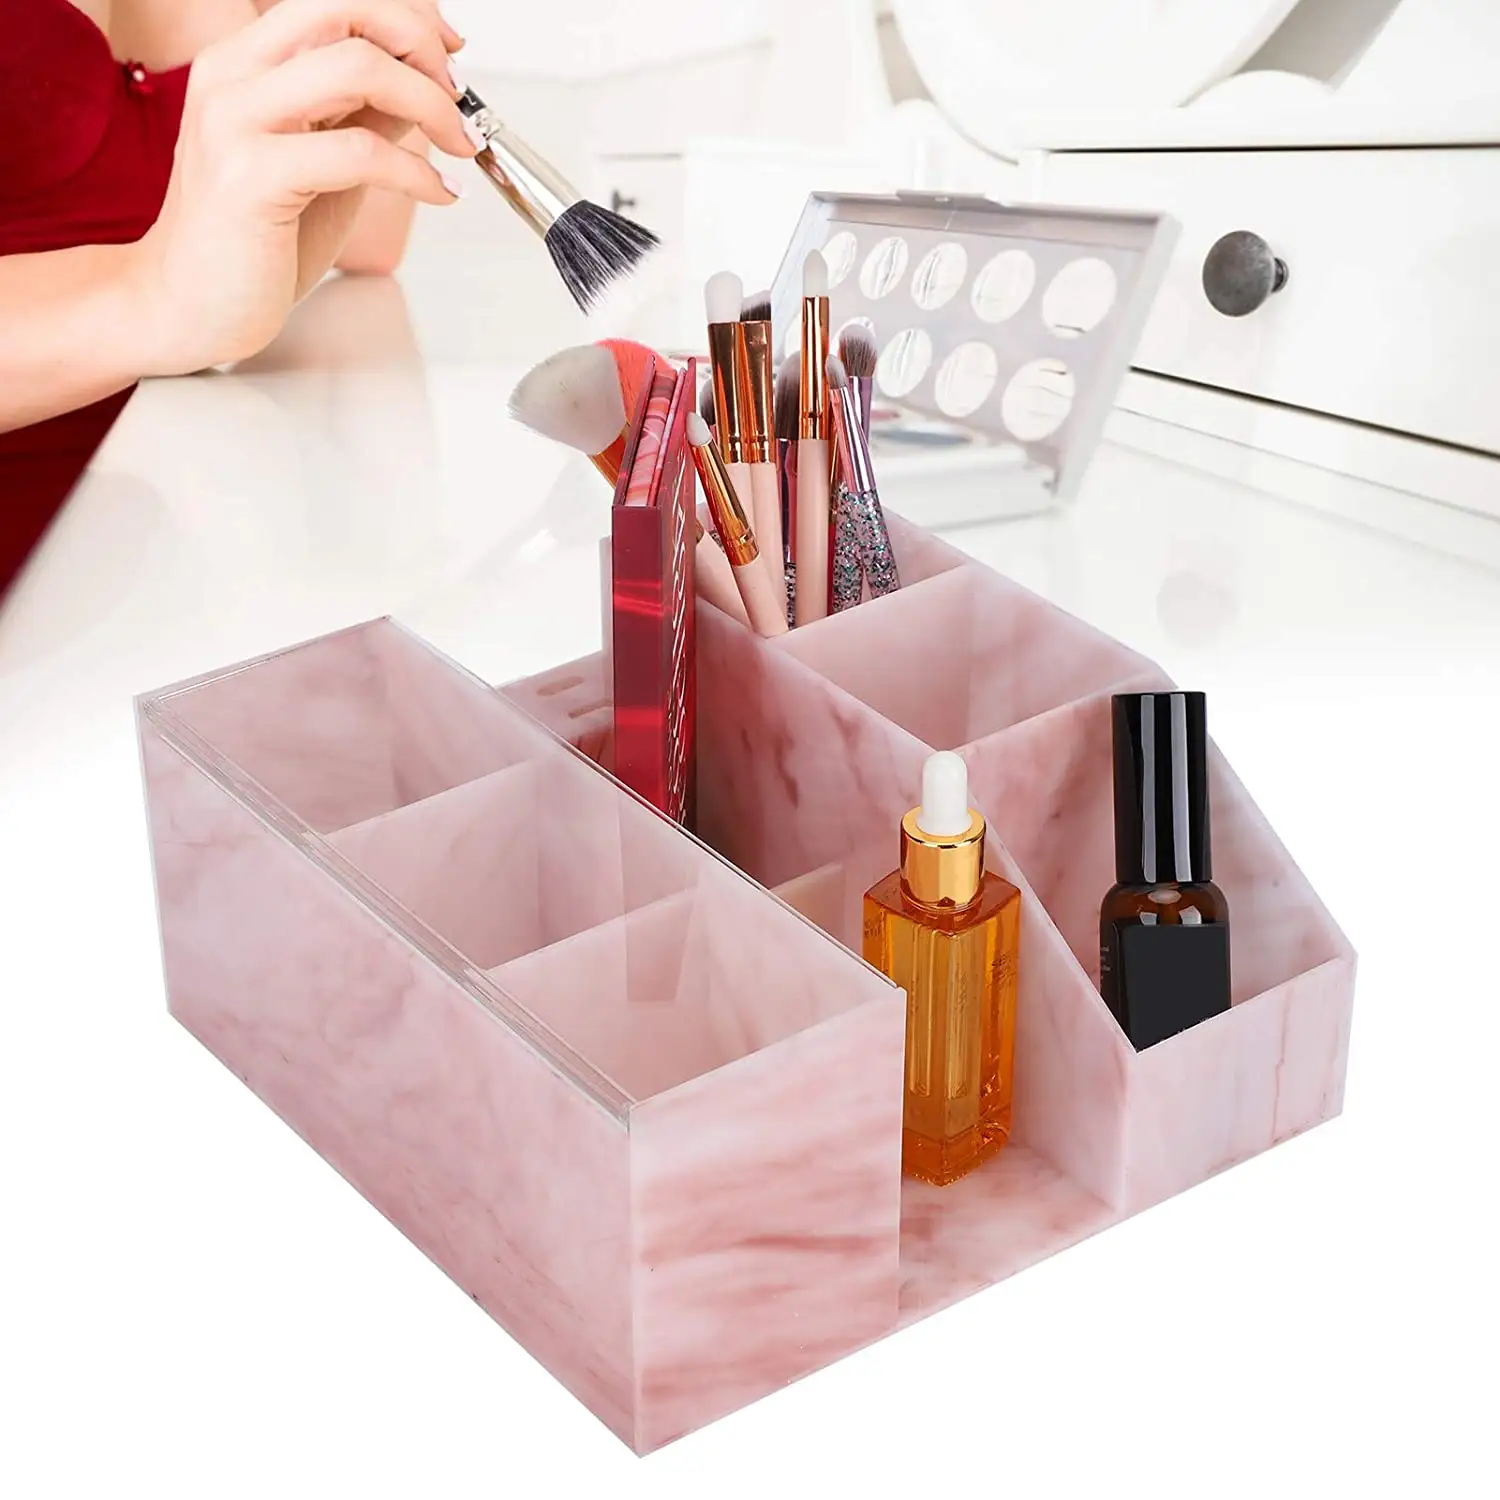 Wimpern Aufbewahrung sbox Beauty Display Stand Acryl Aufbewahrung sbox Wimpern Display Box für Beauty Salon Home